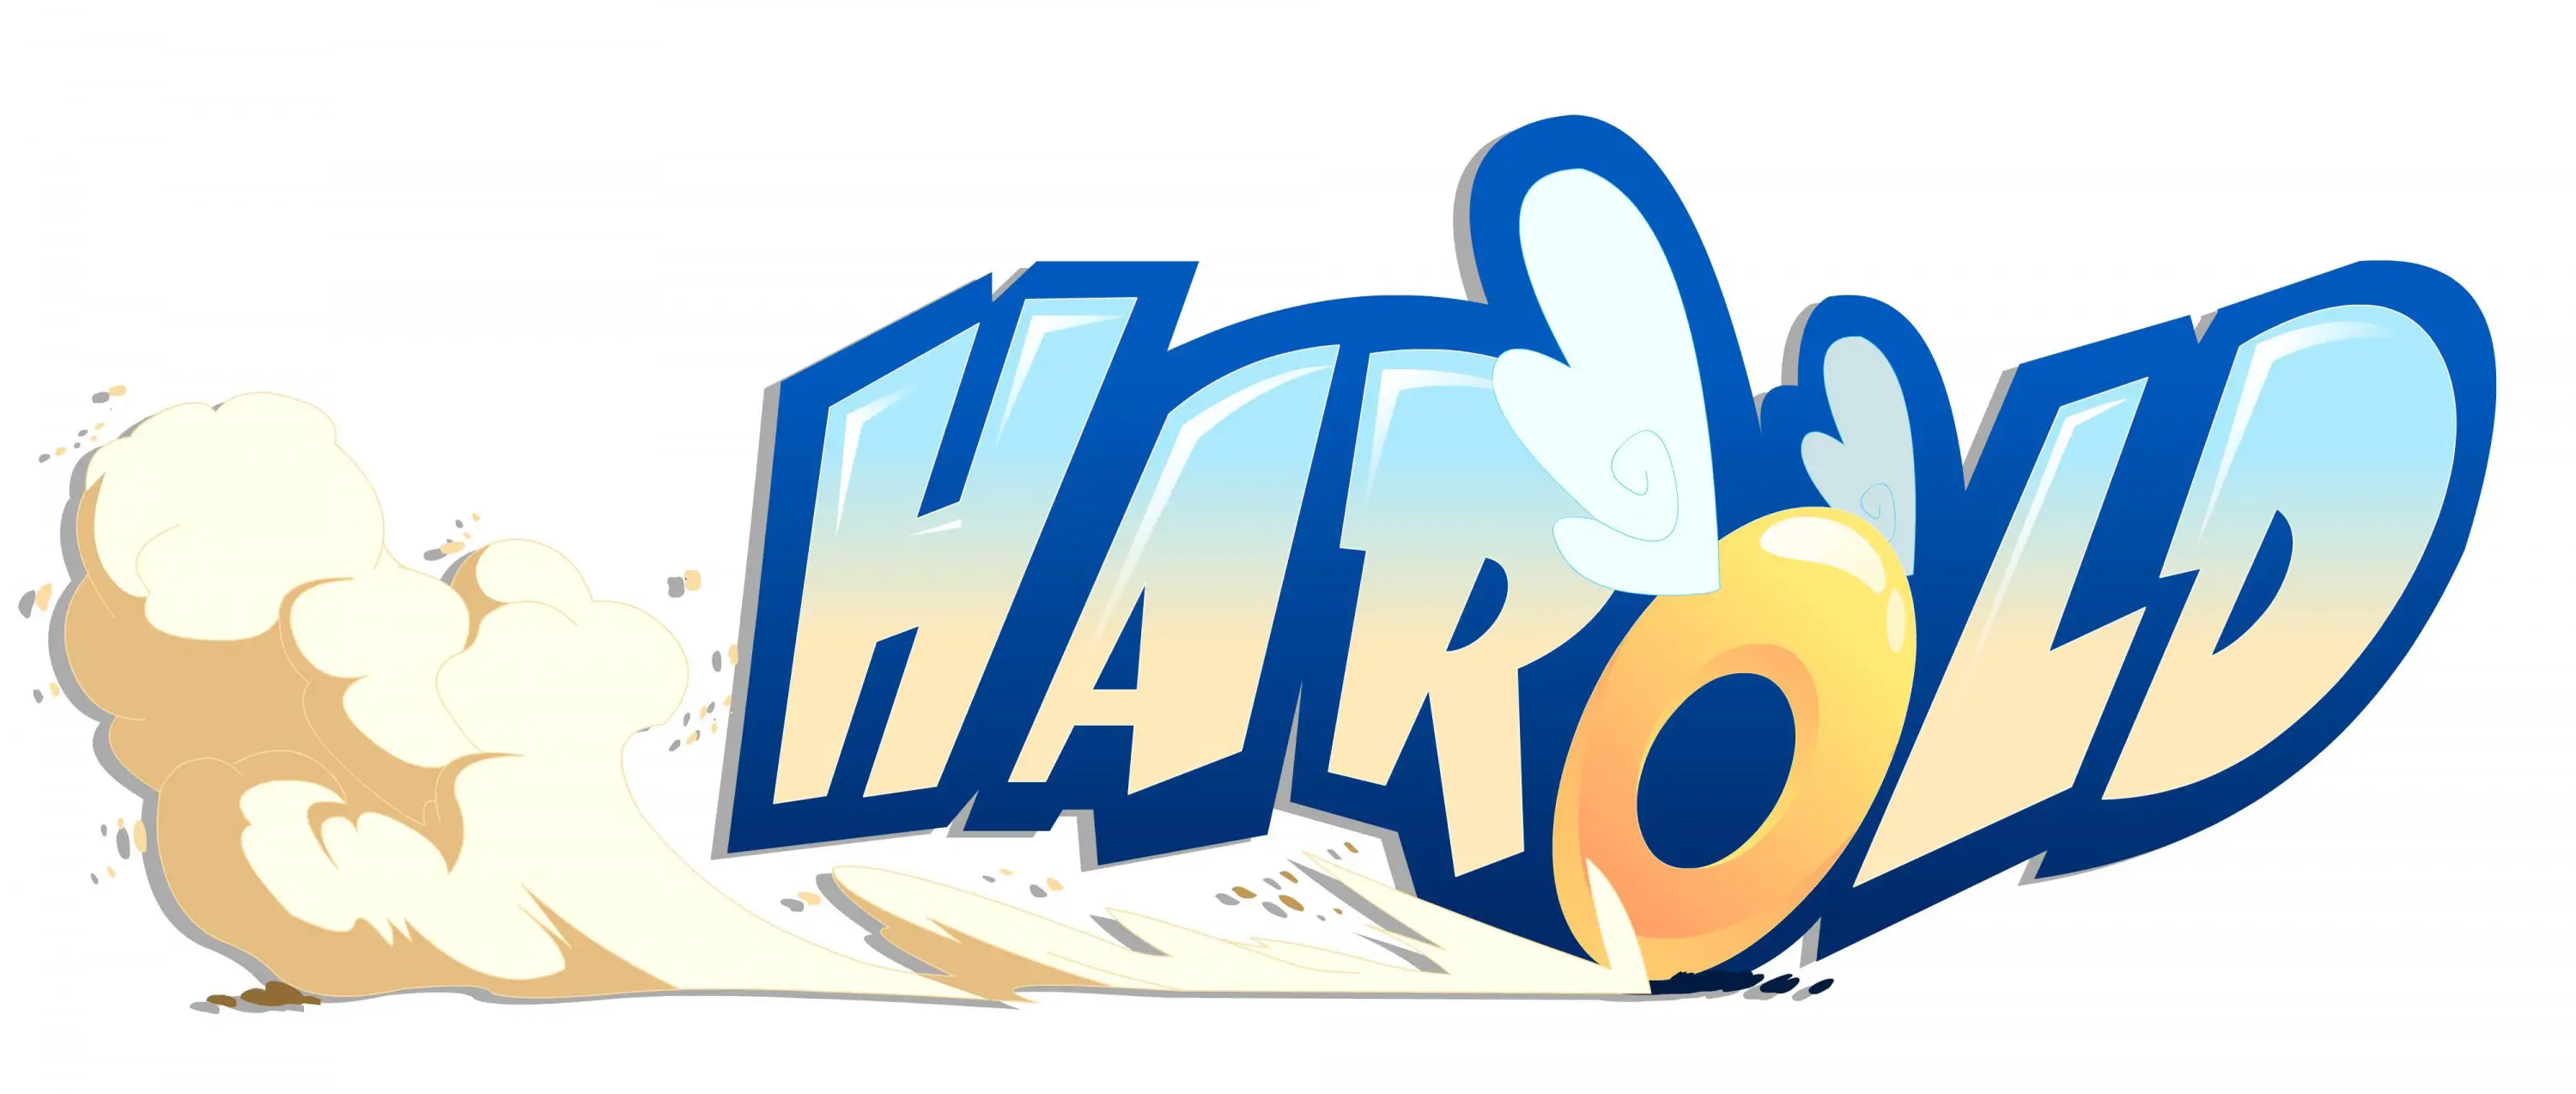 Harold_logo